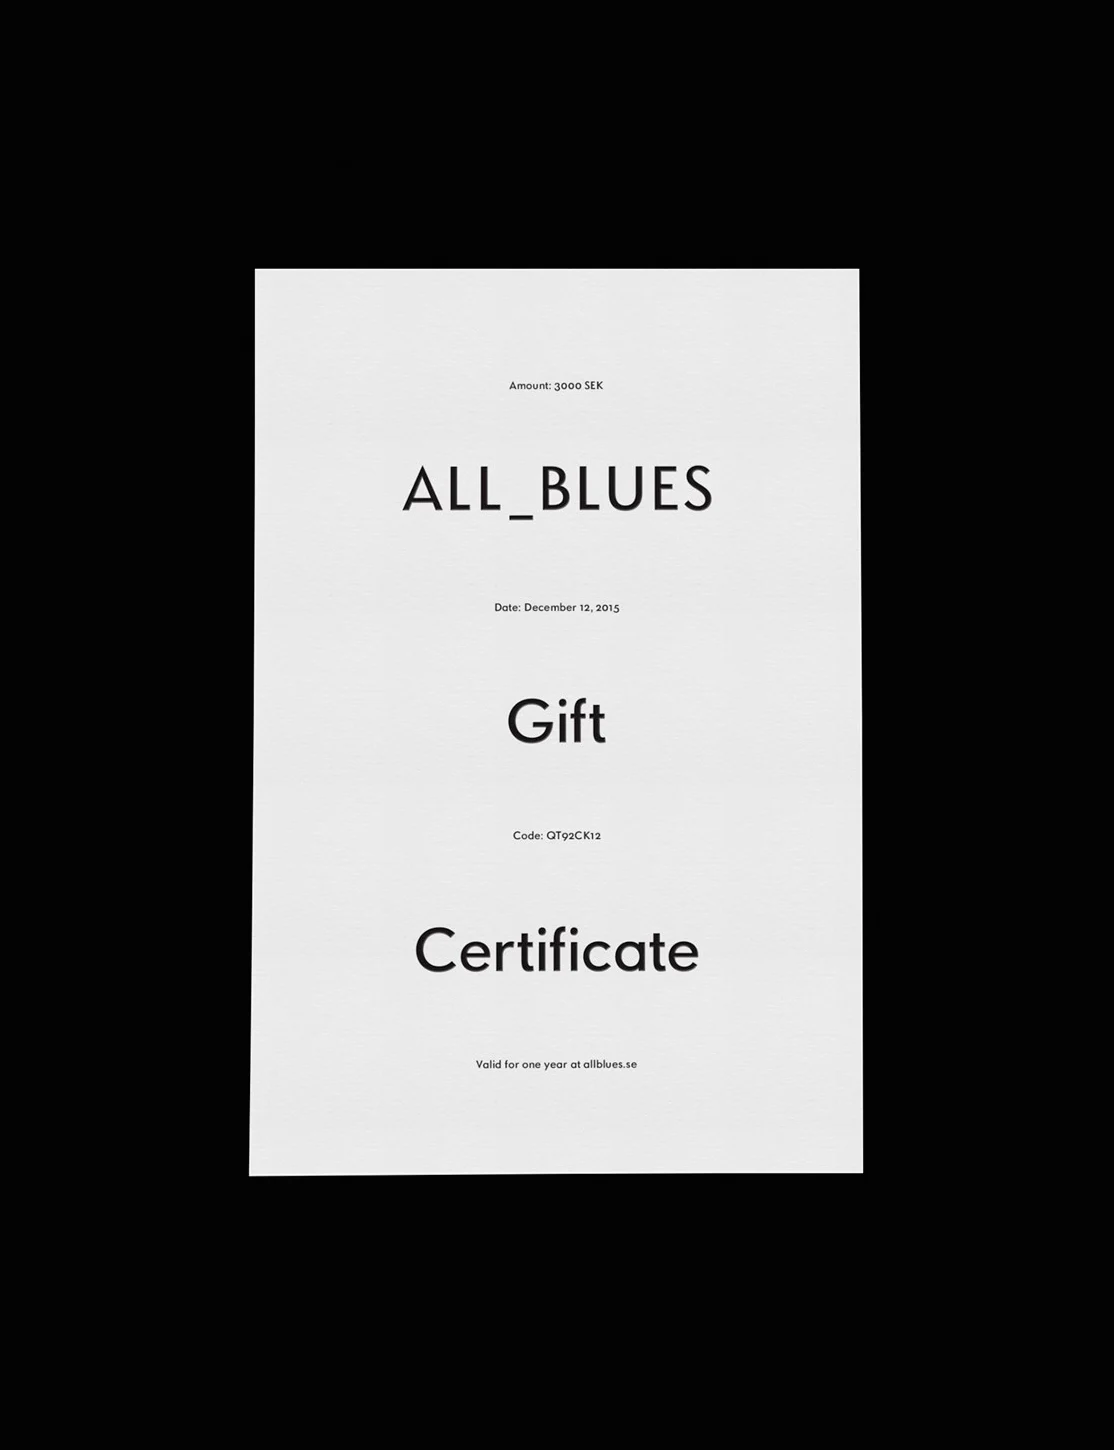 All Blues - Image block 2 image 1